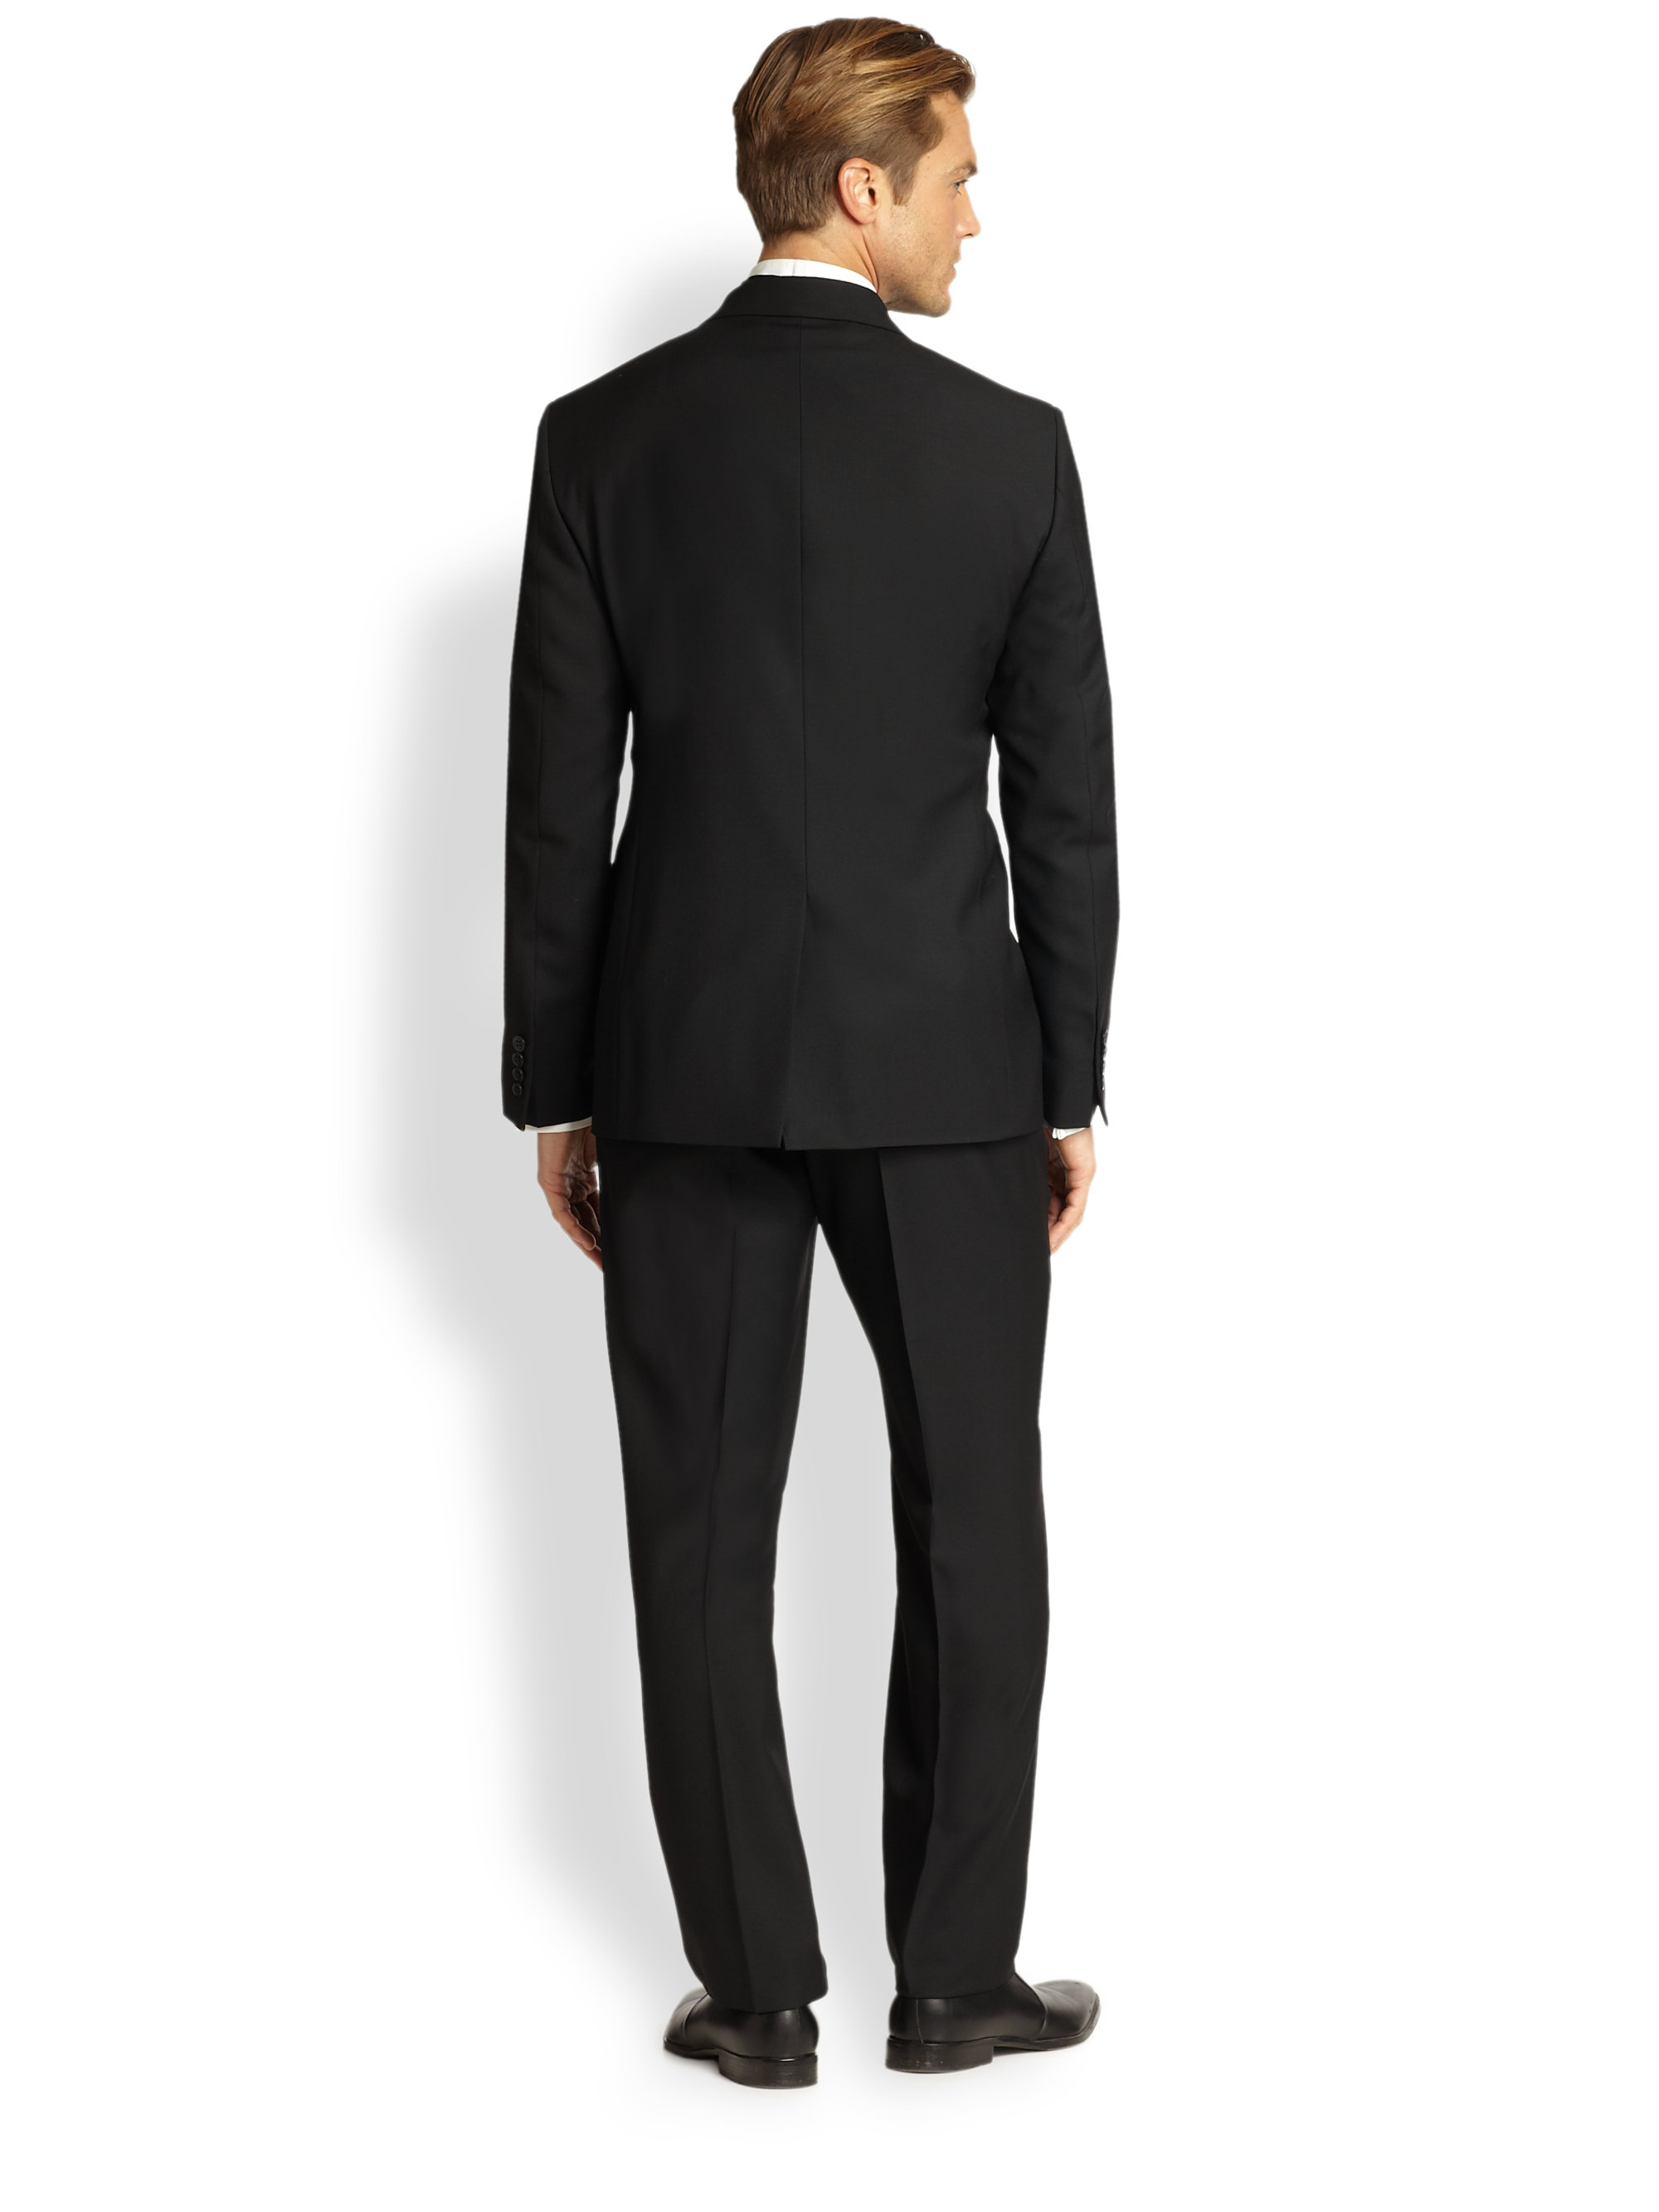 Lyst - Polo Ralph Lauren Doublebreasted Tuxedo in Black for Men